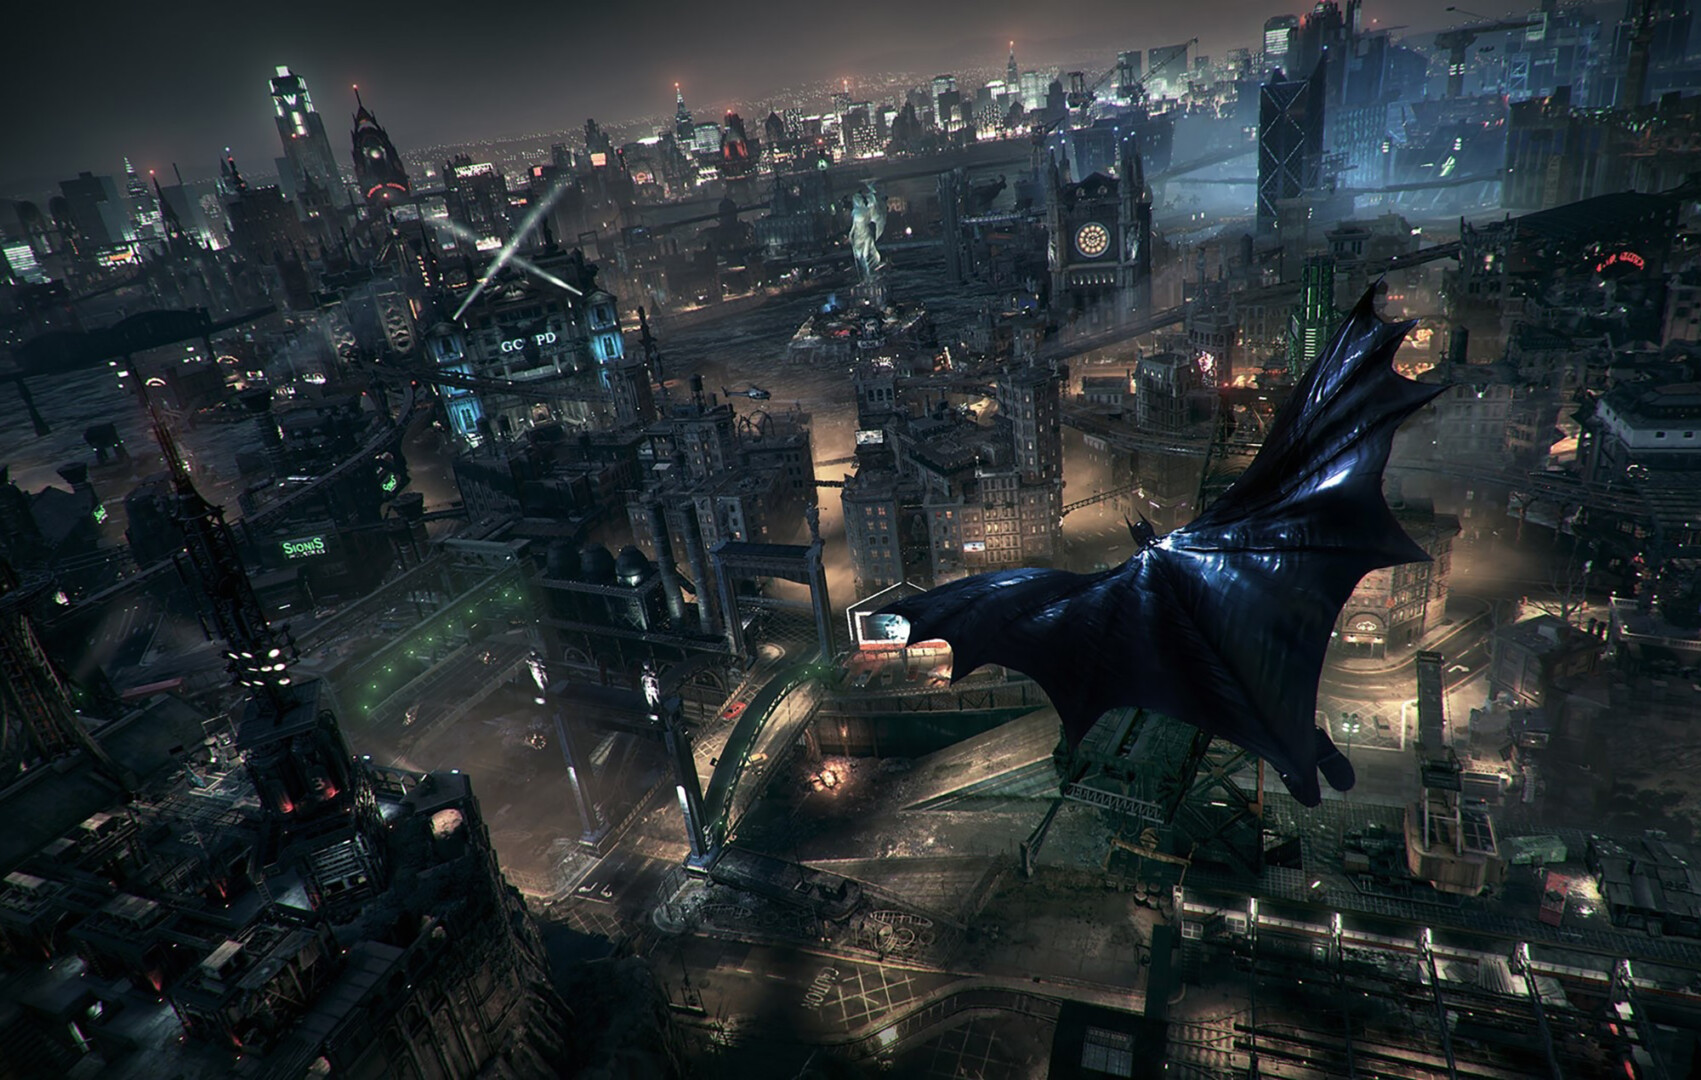 Possible concept art for a canceled Batman game surfaces online